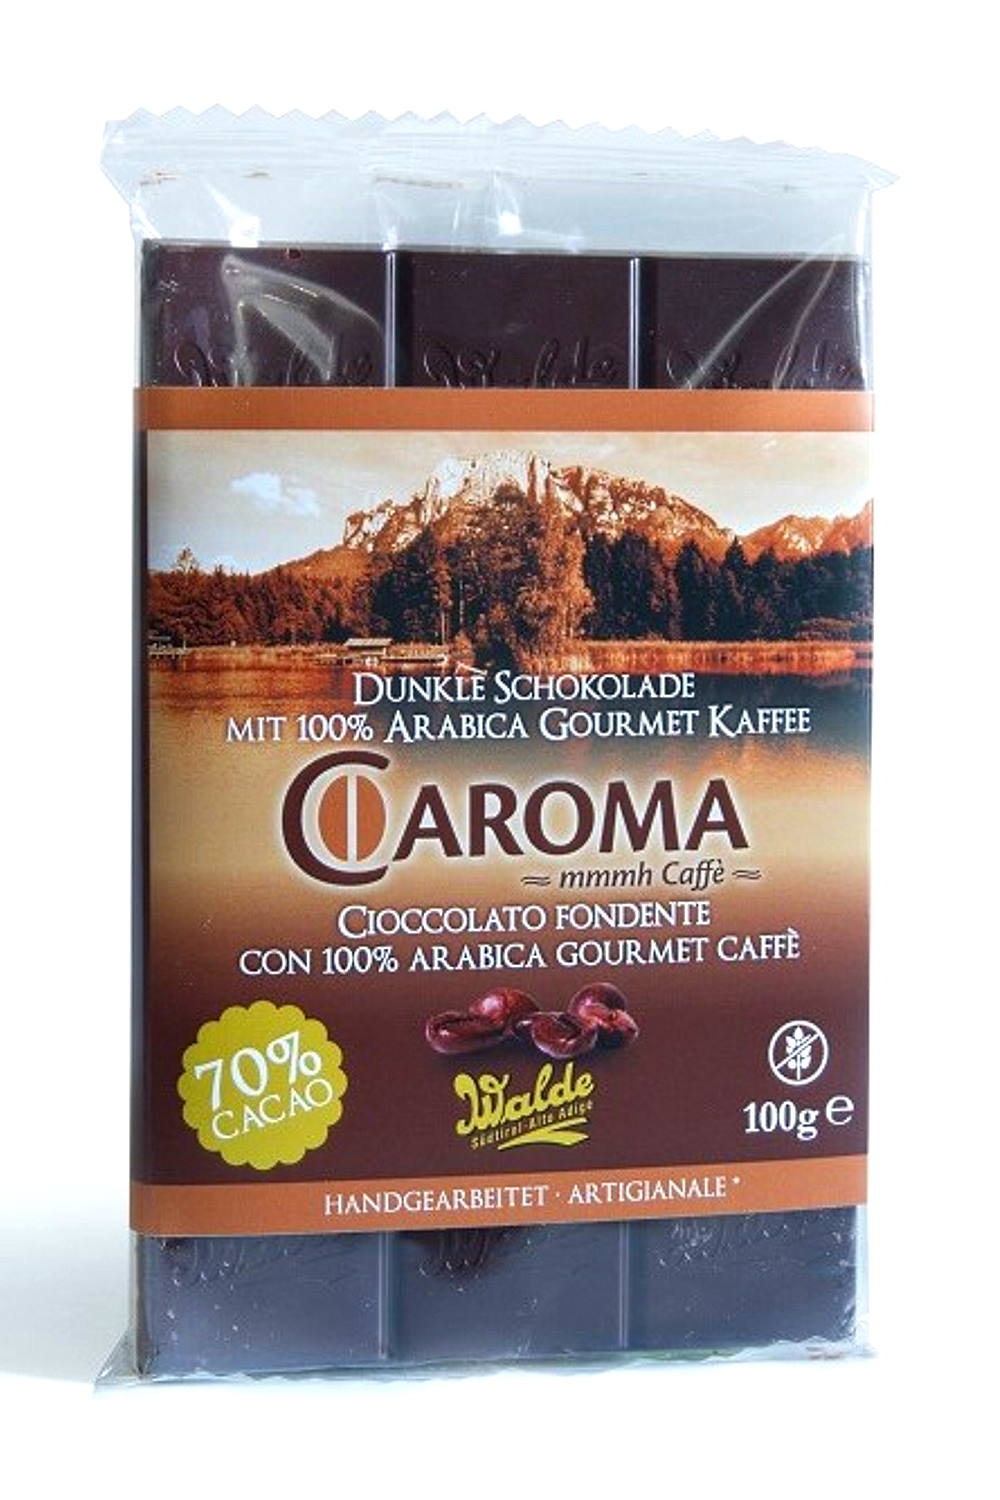 Caroma Dark chocolate with 100% Arabica caffe 70% Cocoa 100g Wald...